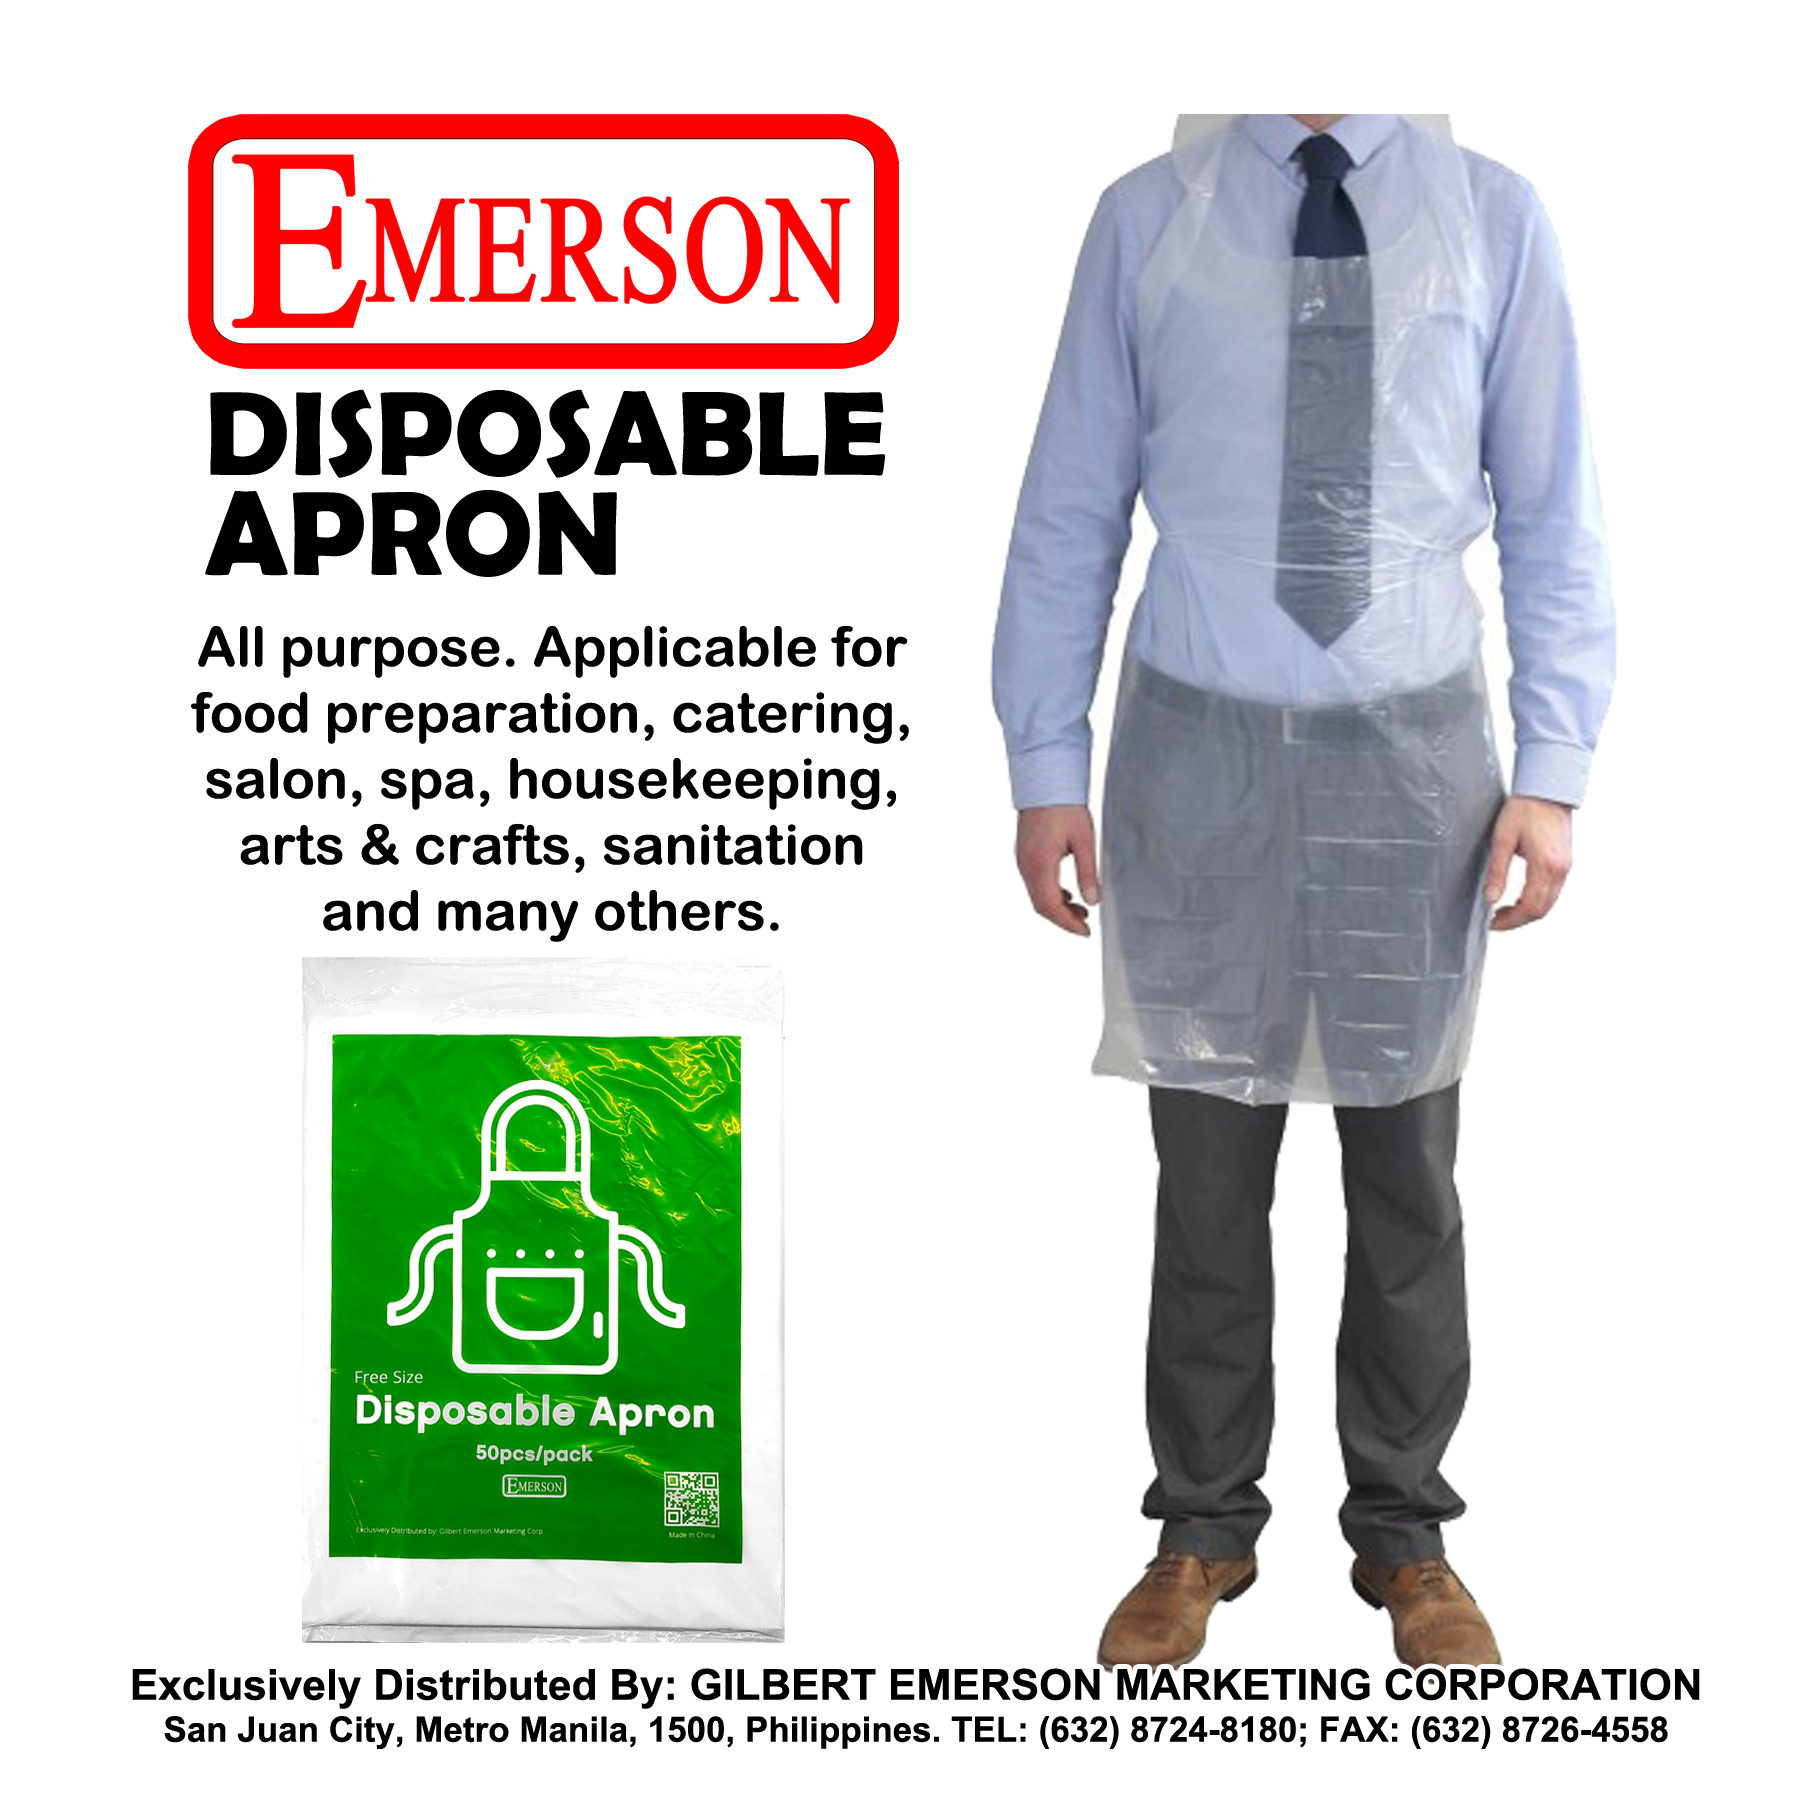 Gilbert Emerson Marketing Corporation - EMERSON DISPOSABLE